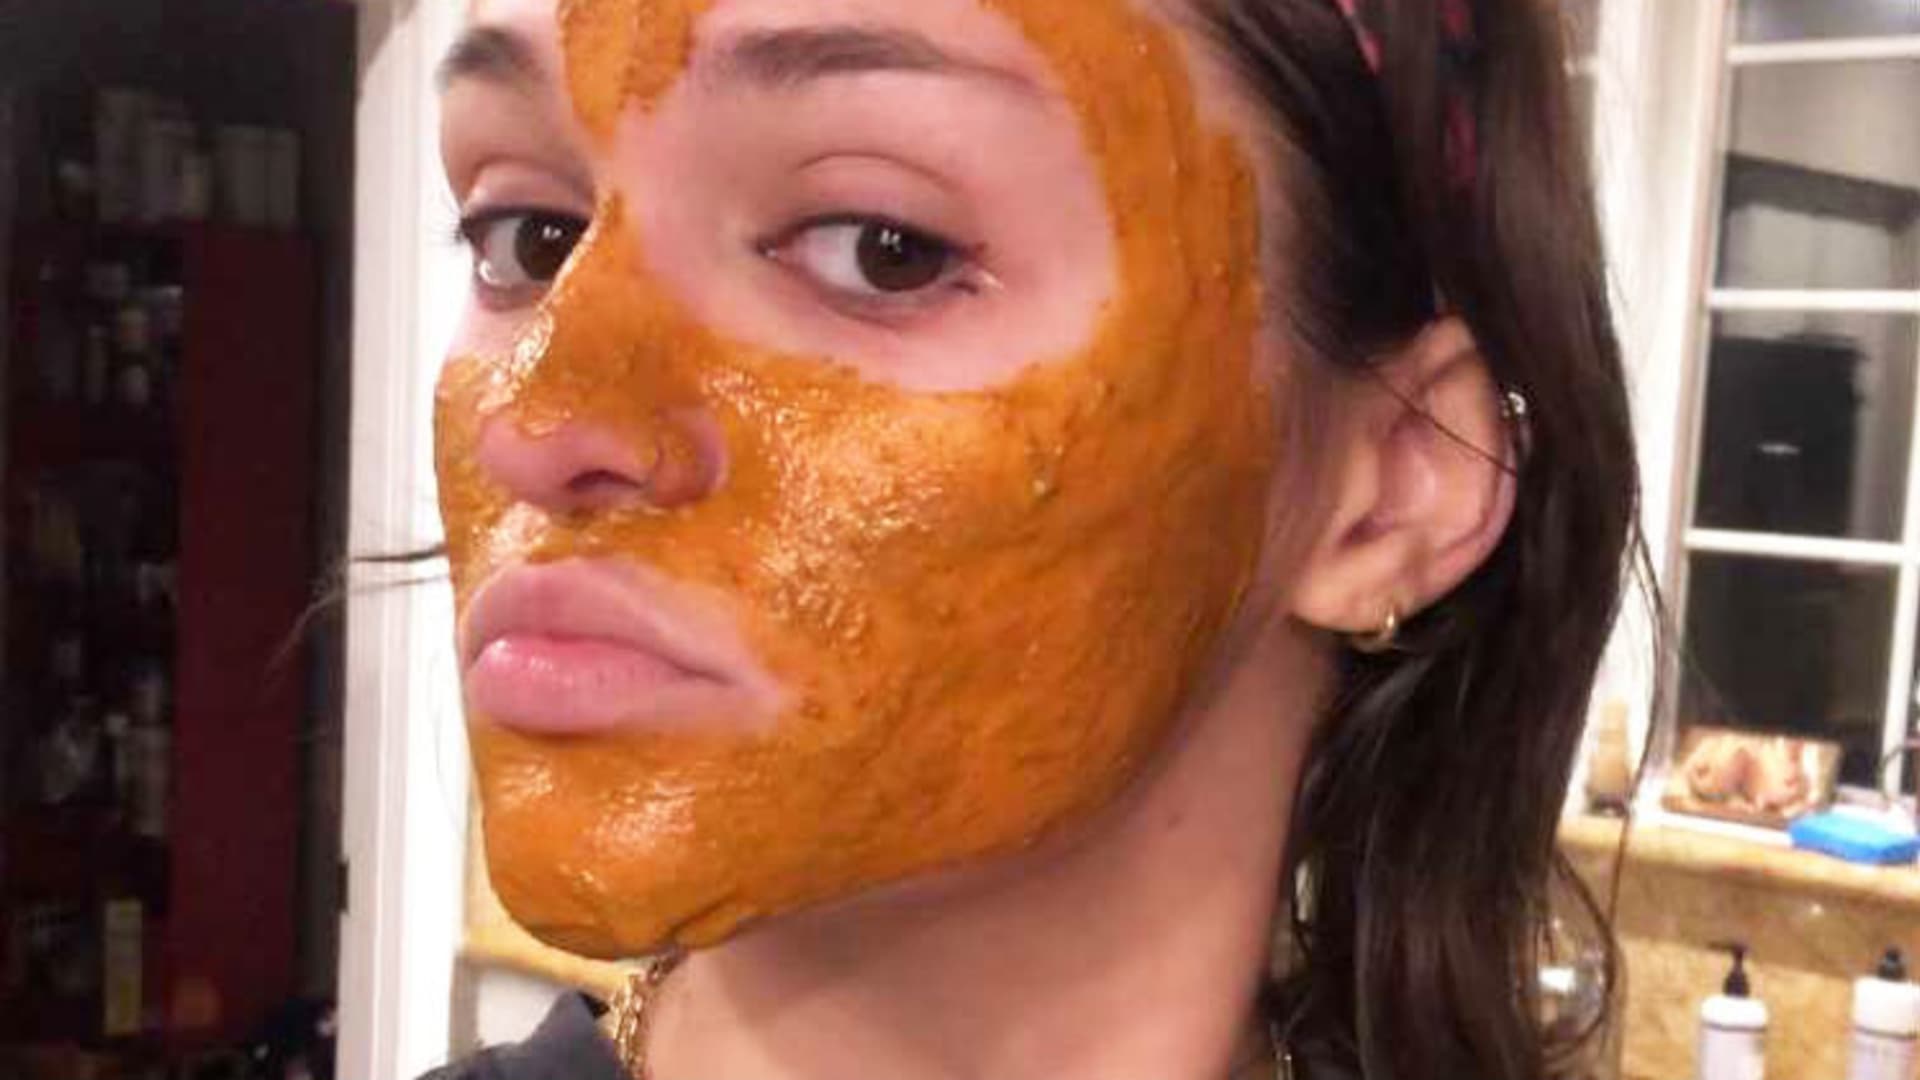 Mier applies her DIY face mask.